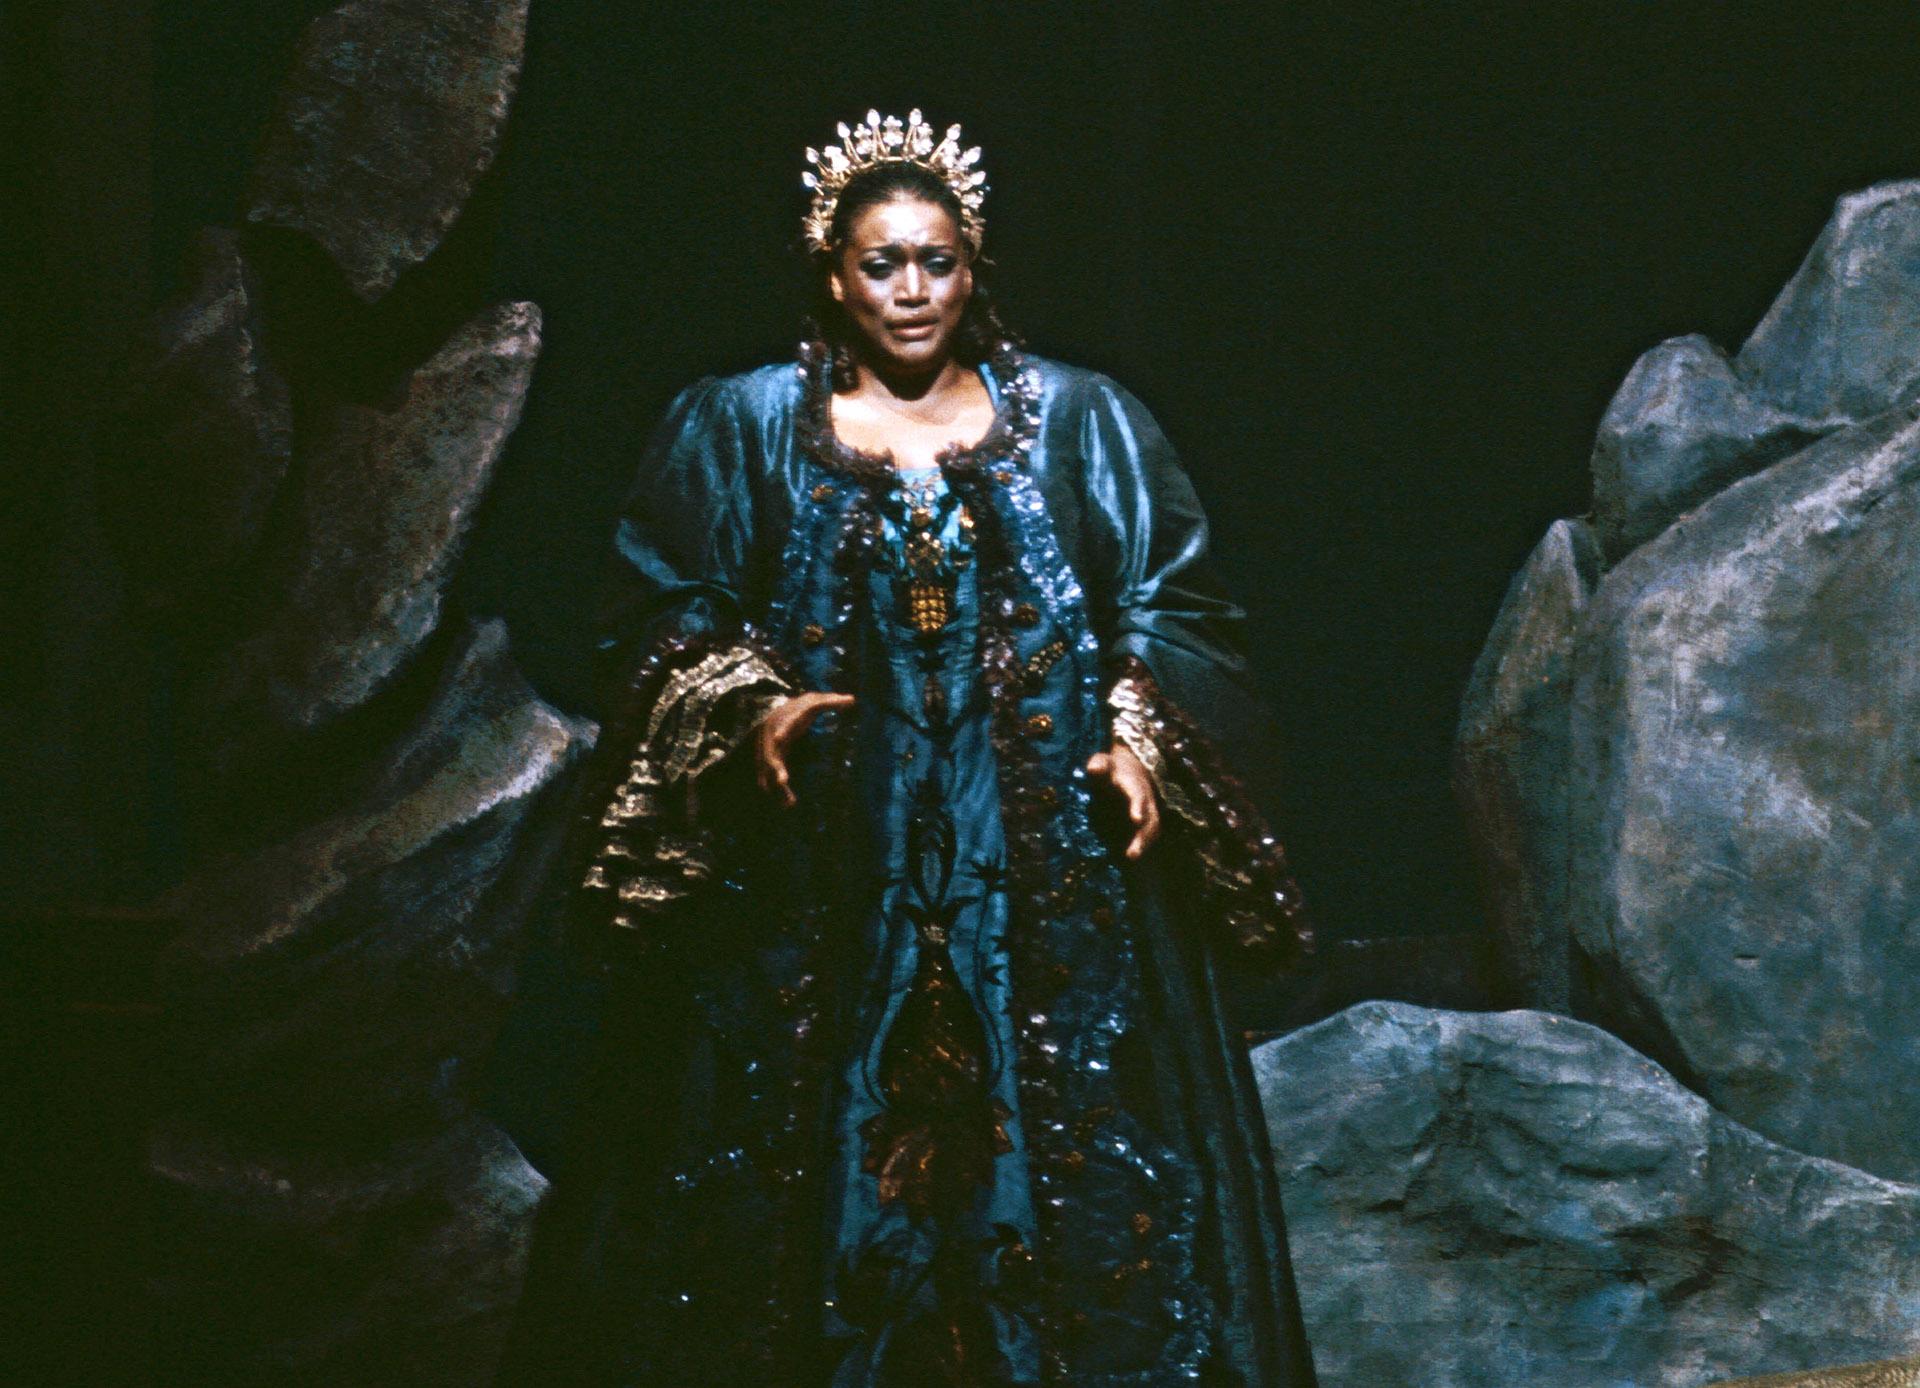 This 1984 image released by the Metropolitan Opera shows Jessye Norman in the title role of Strauss’ “Ariadne auf Naxos,” in New York. (Erika Davidson / Metropolitan Opera via AP)